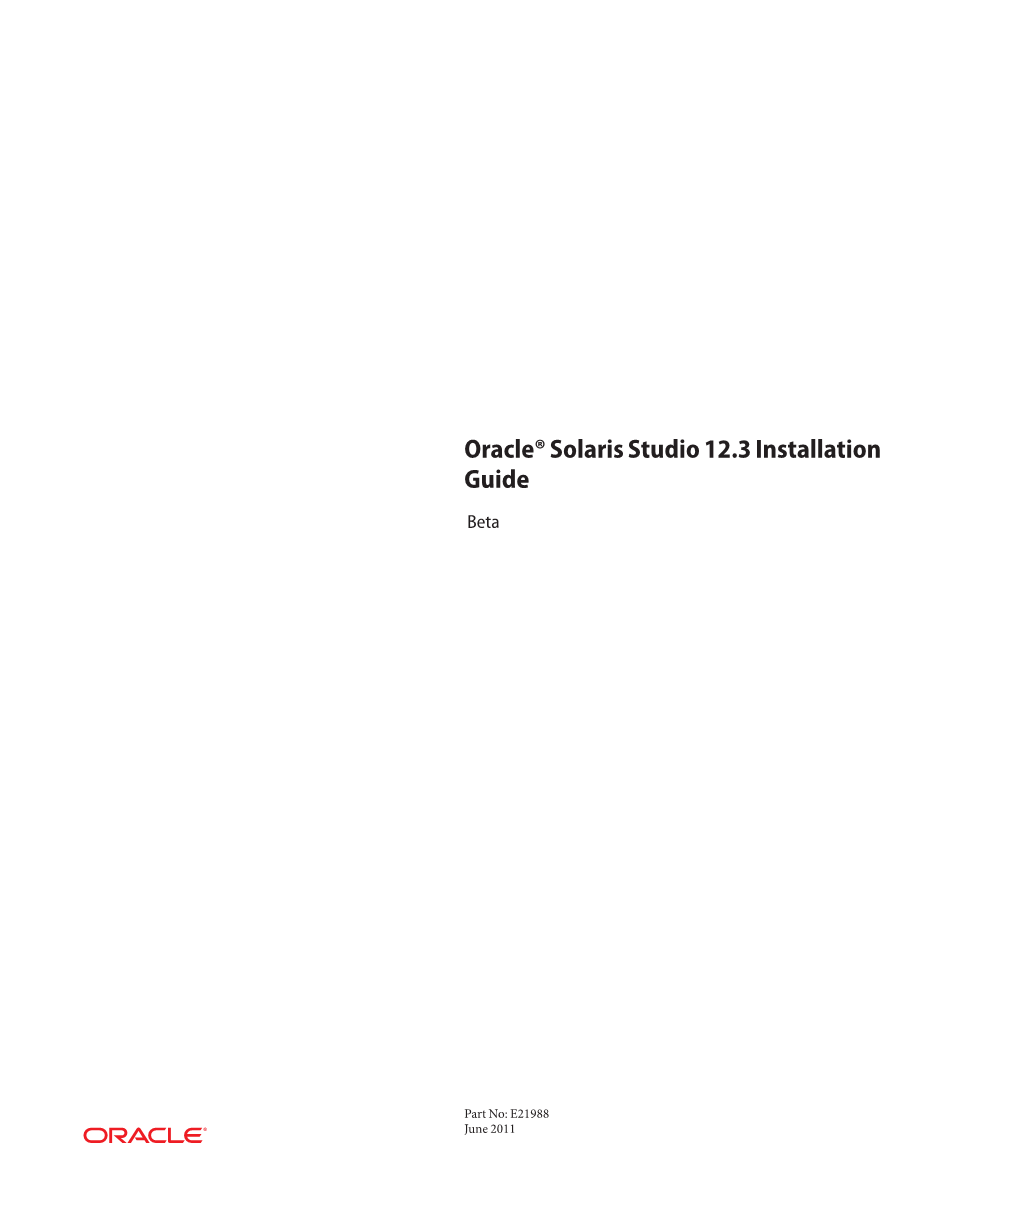 Oracle Solaris Studio 12.3 Installation Guide • June 2011 (Beta) Contents